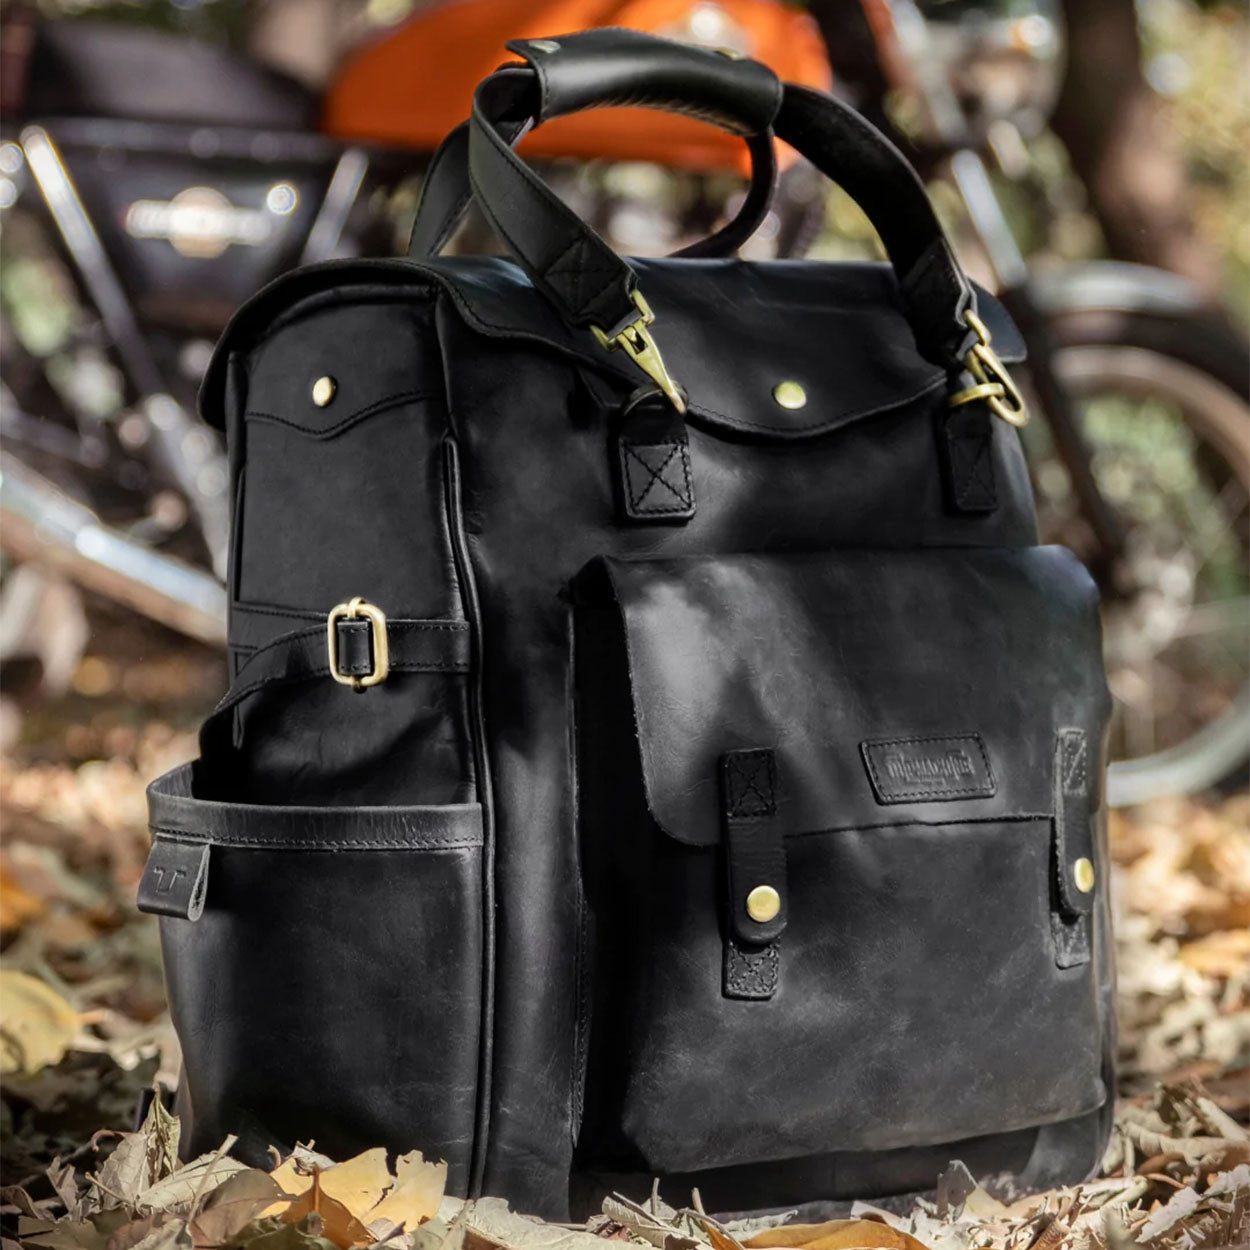 Trip Machine saddle bag Outlander Black